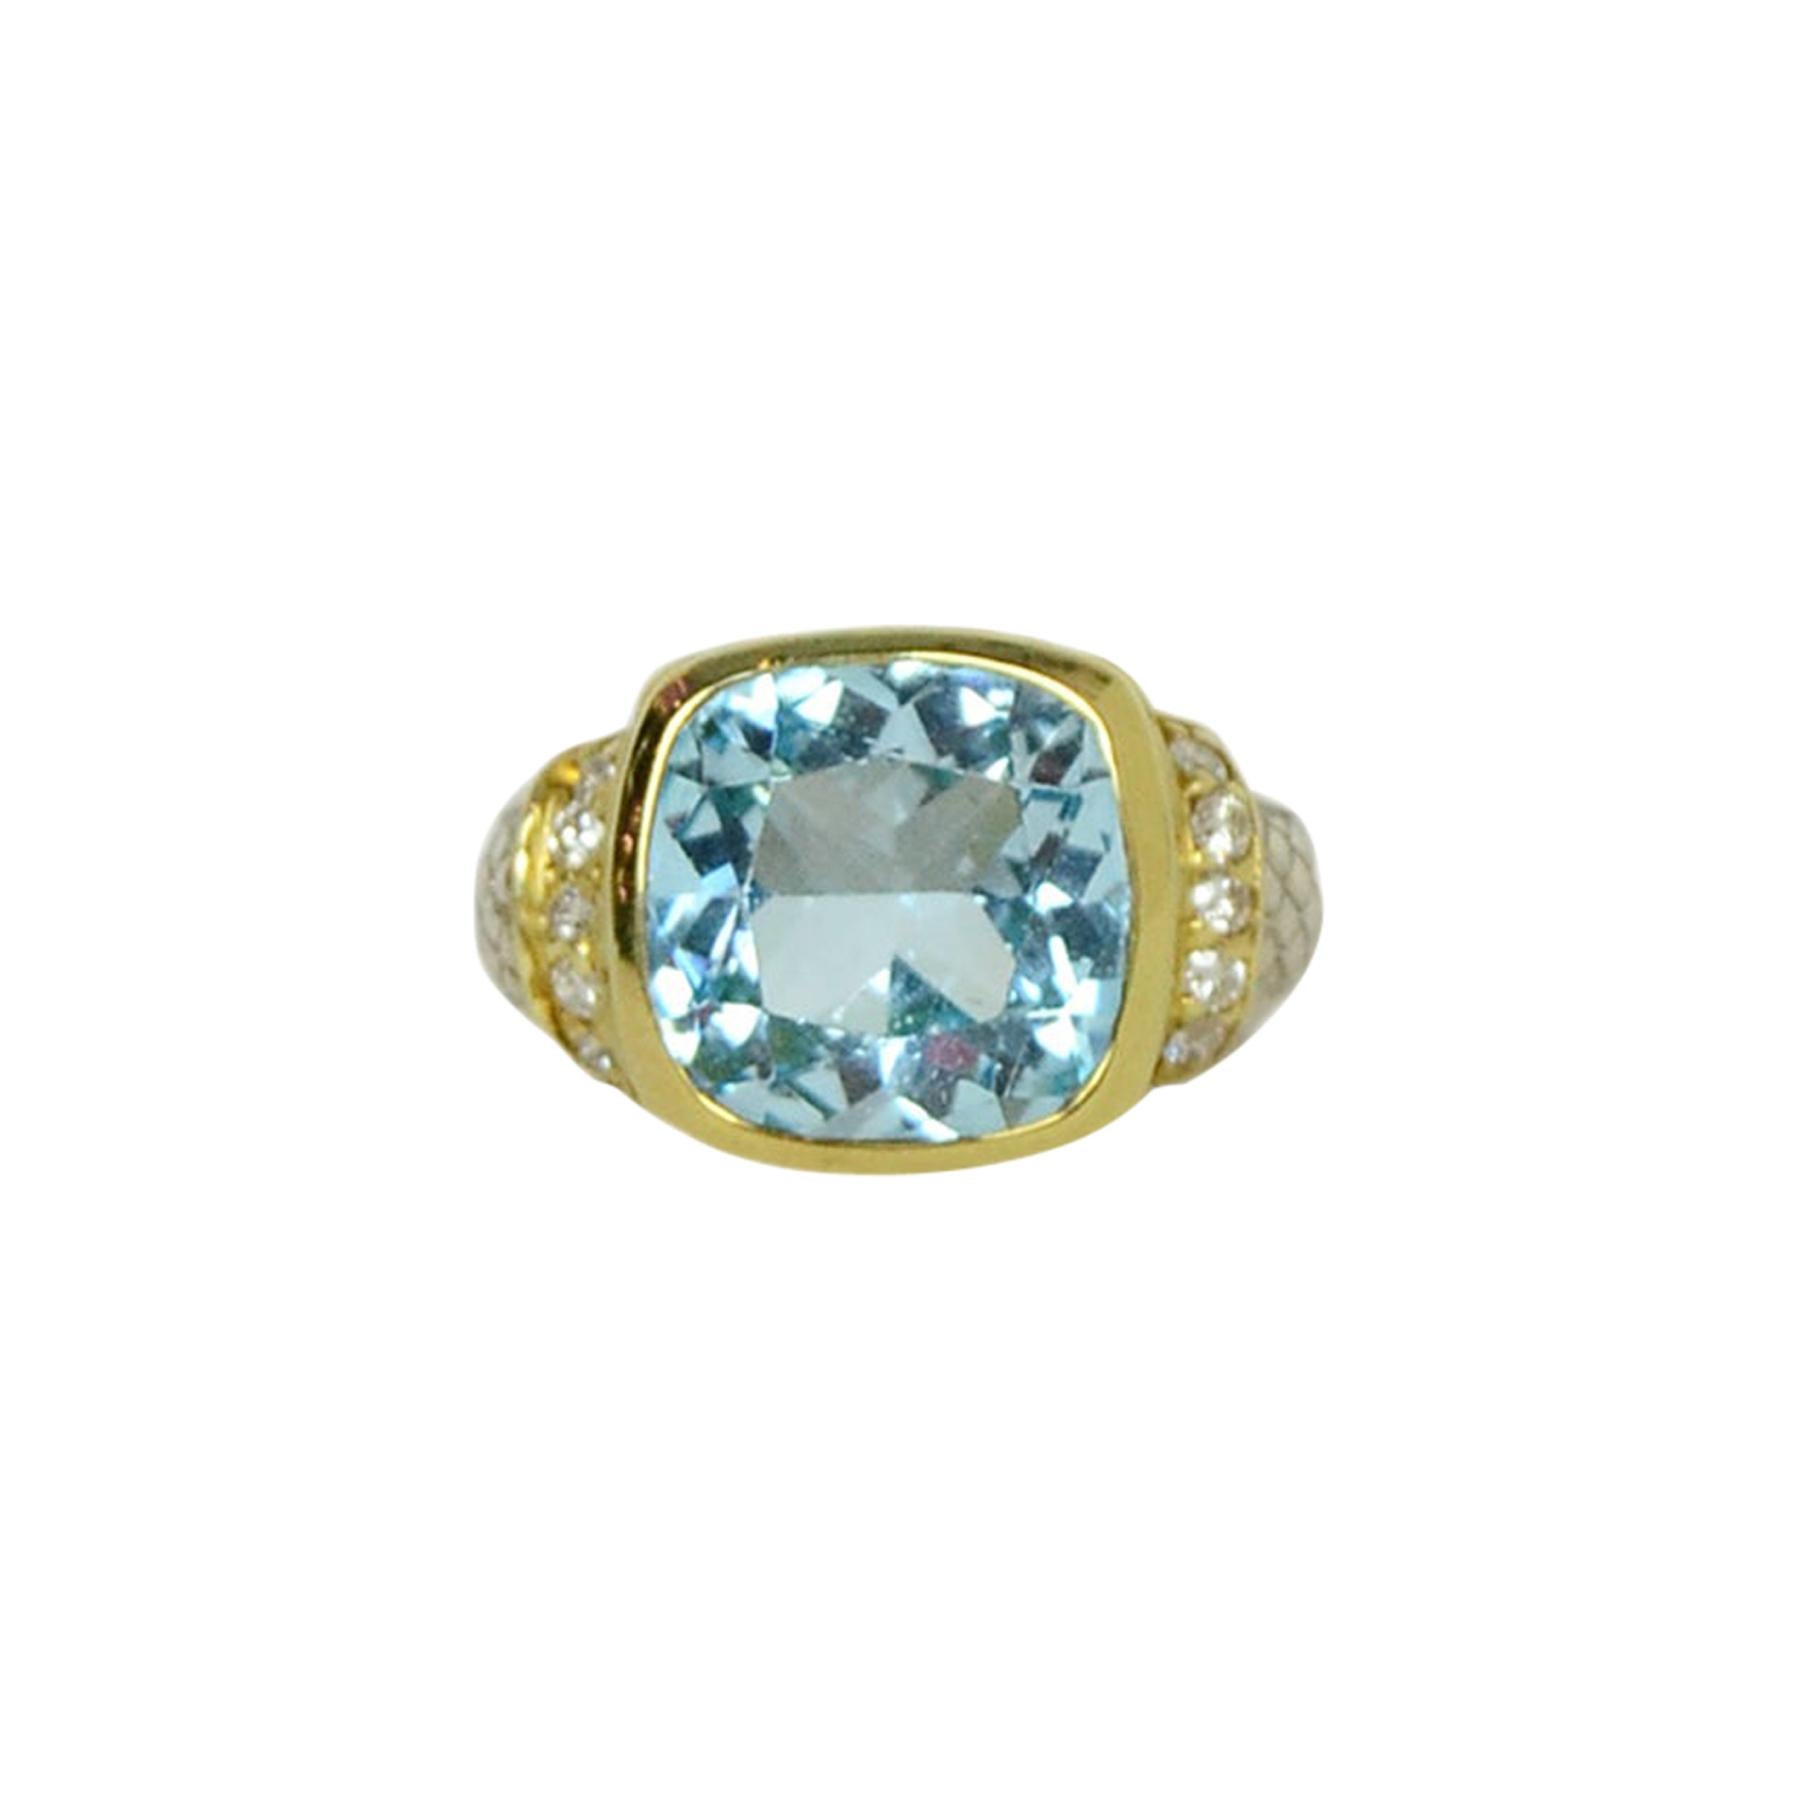 Judith Ripka 18k Gold Blue Topaz and Diamond Ring sz 6.5 